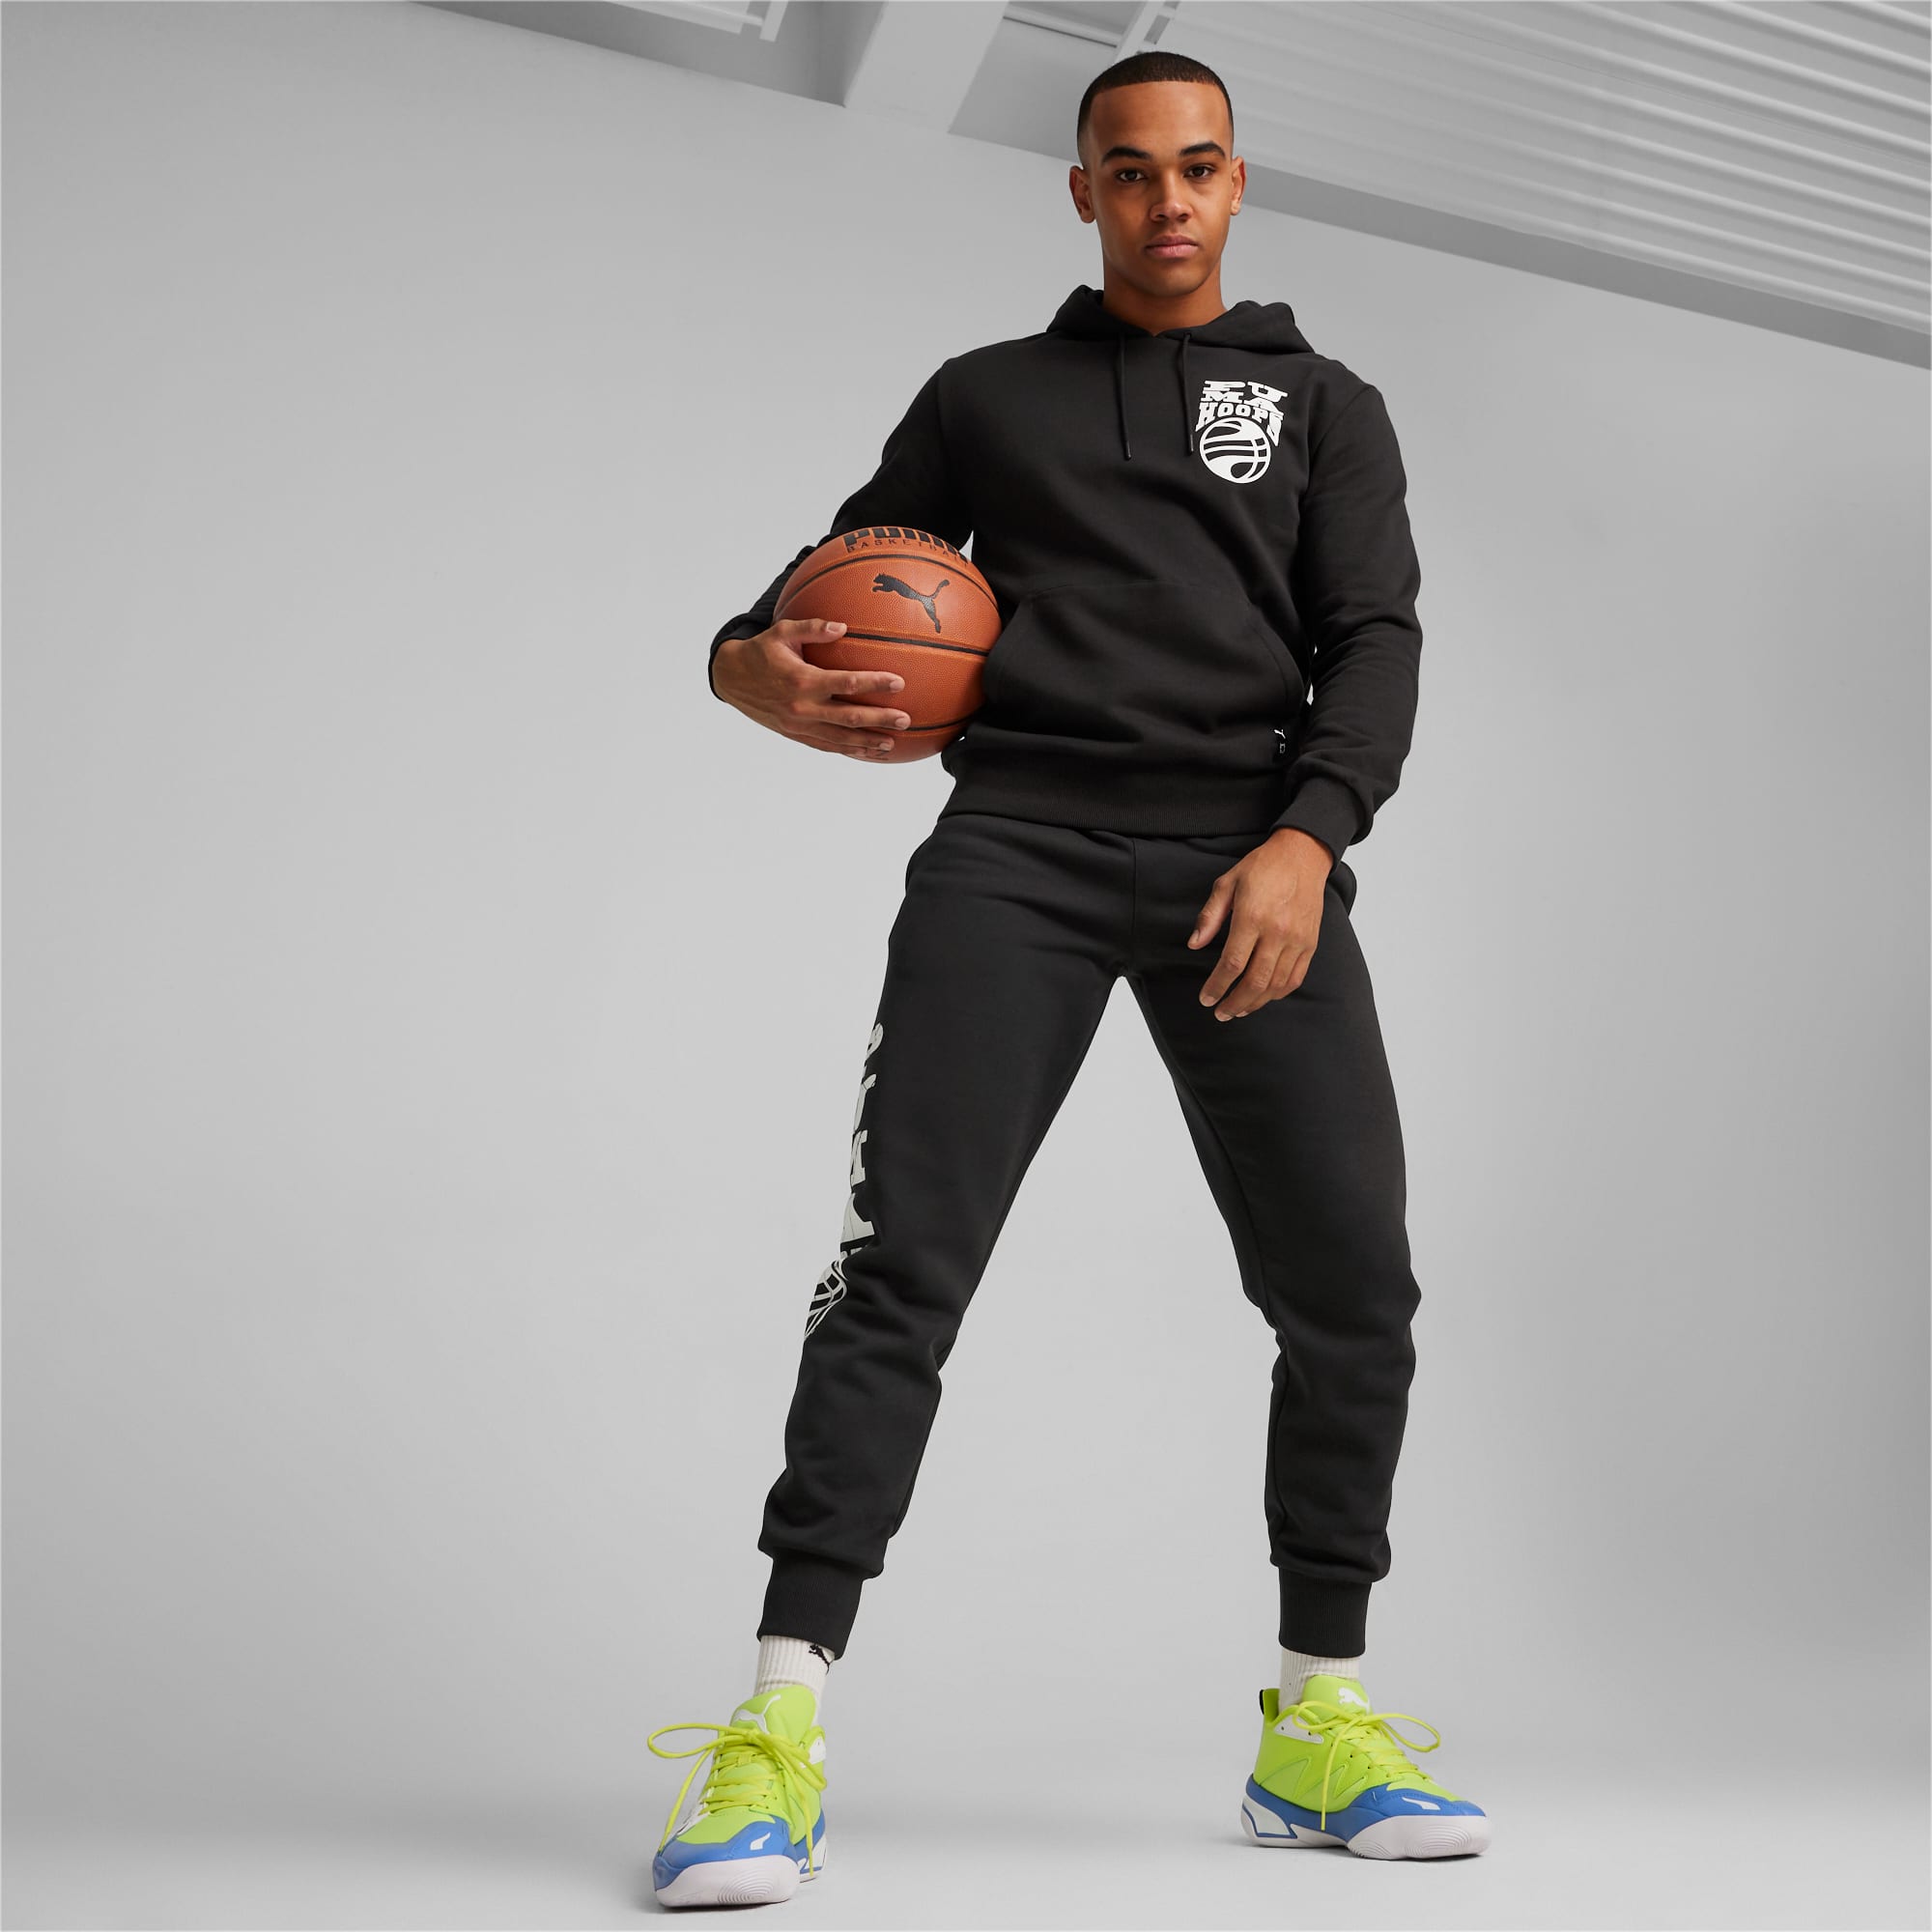 PUMA Posterize 2.0 Men's Basketball Hoodie, Black, Size XS, Clothing